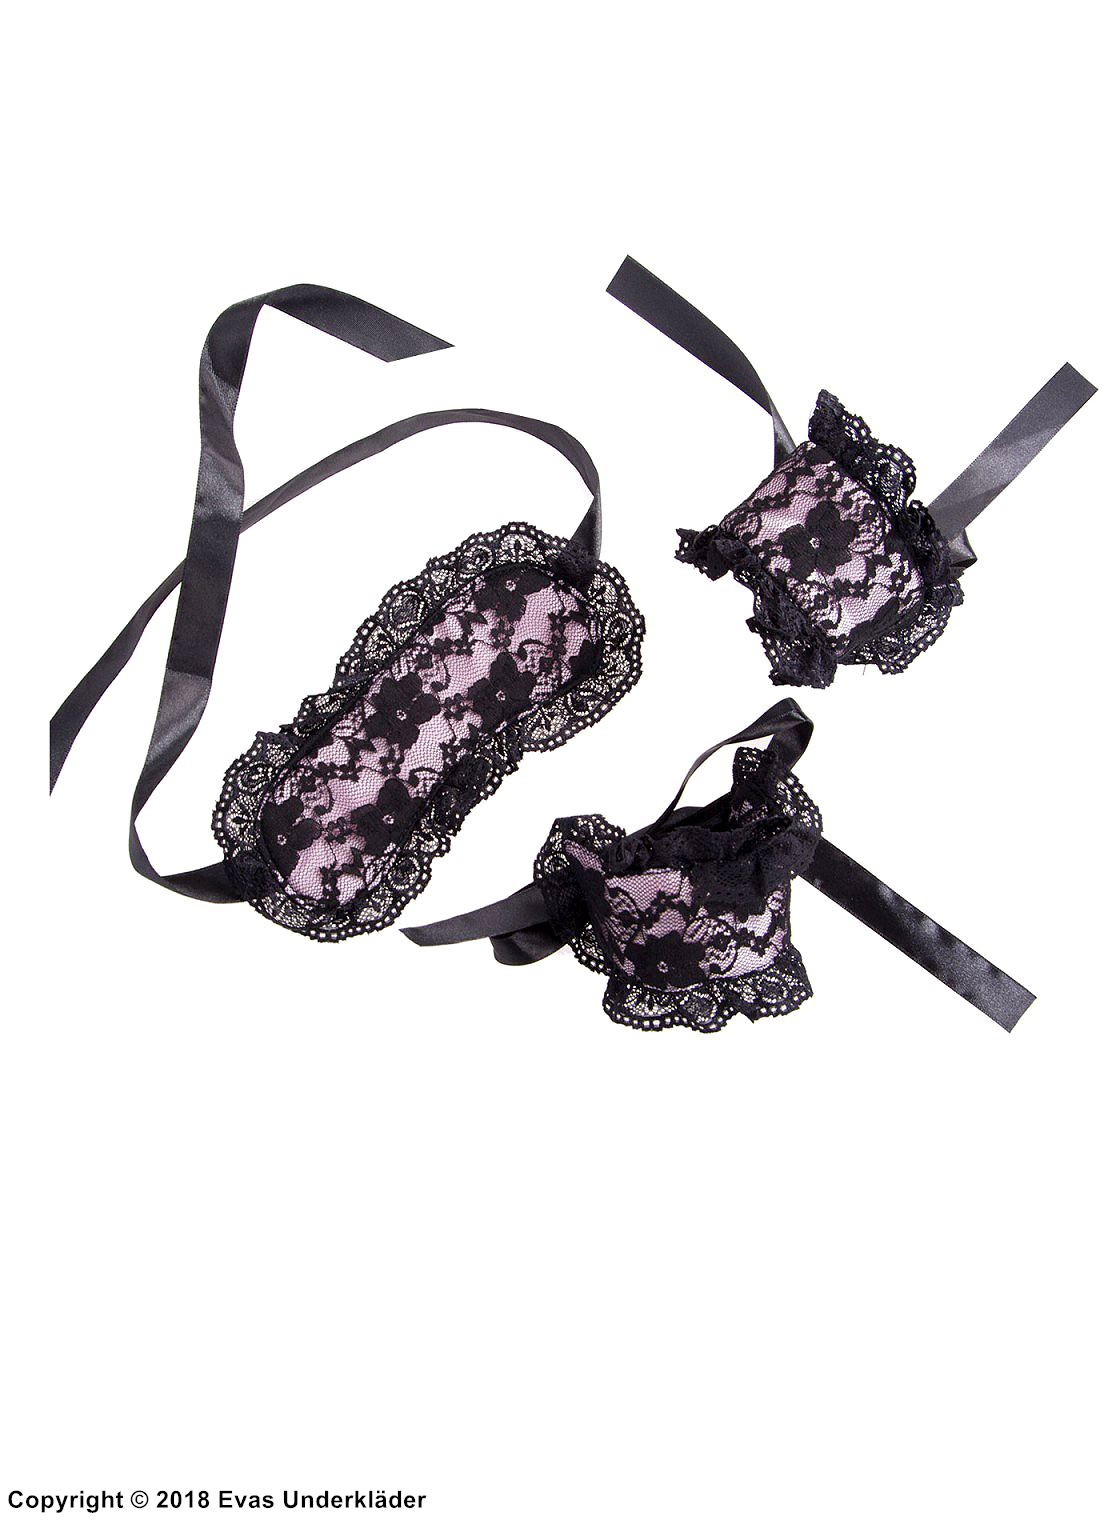 Playful lingerie set, lace ruffles, satin bow, flowers